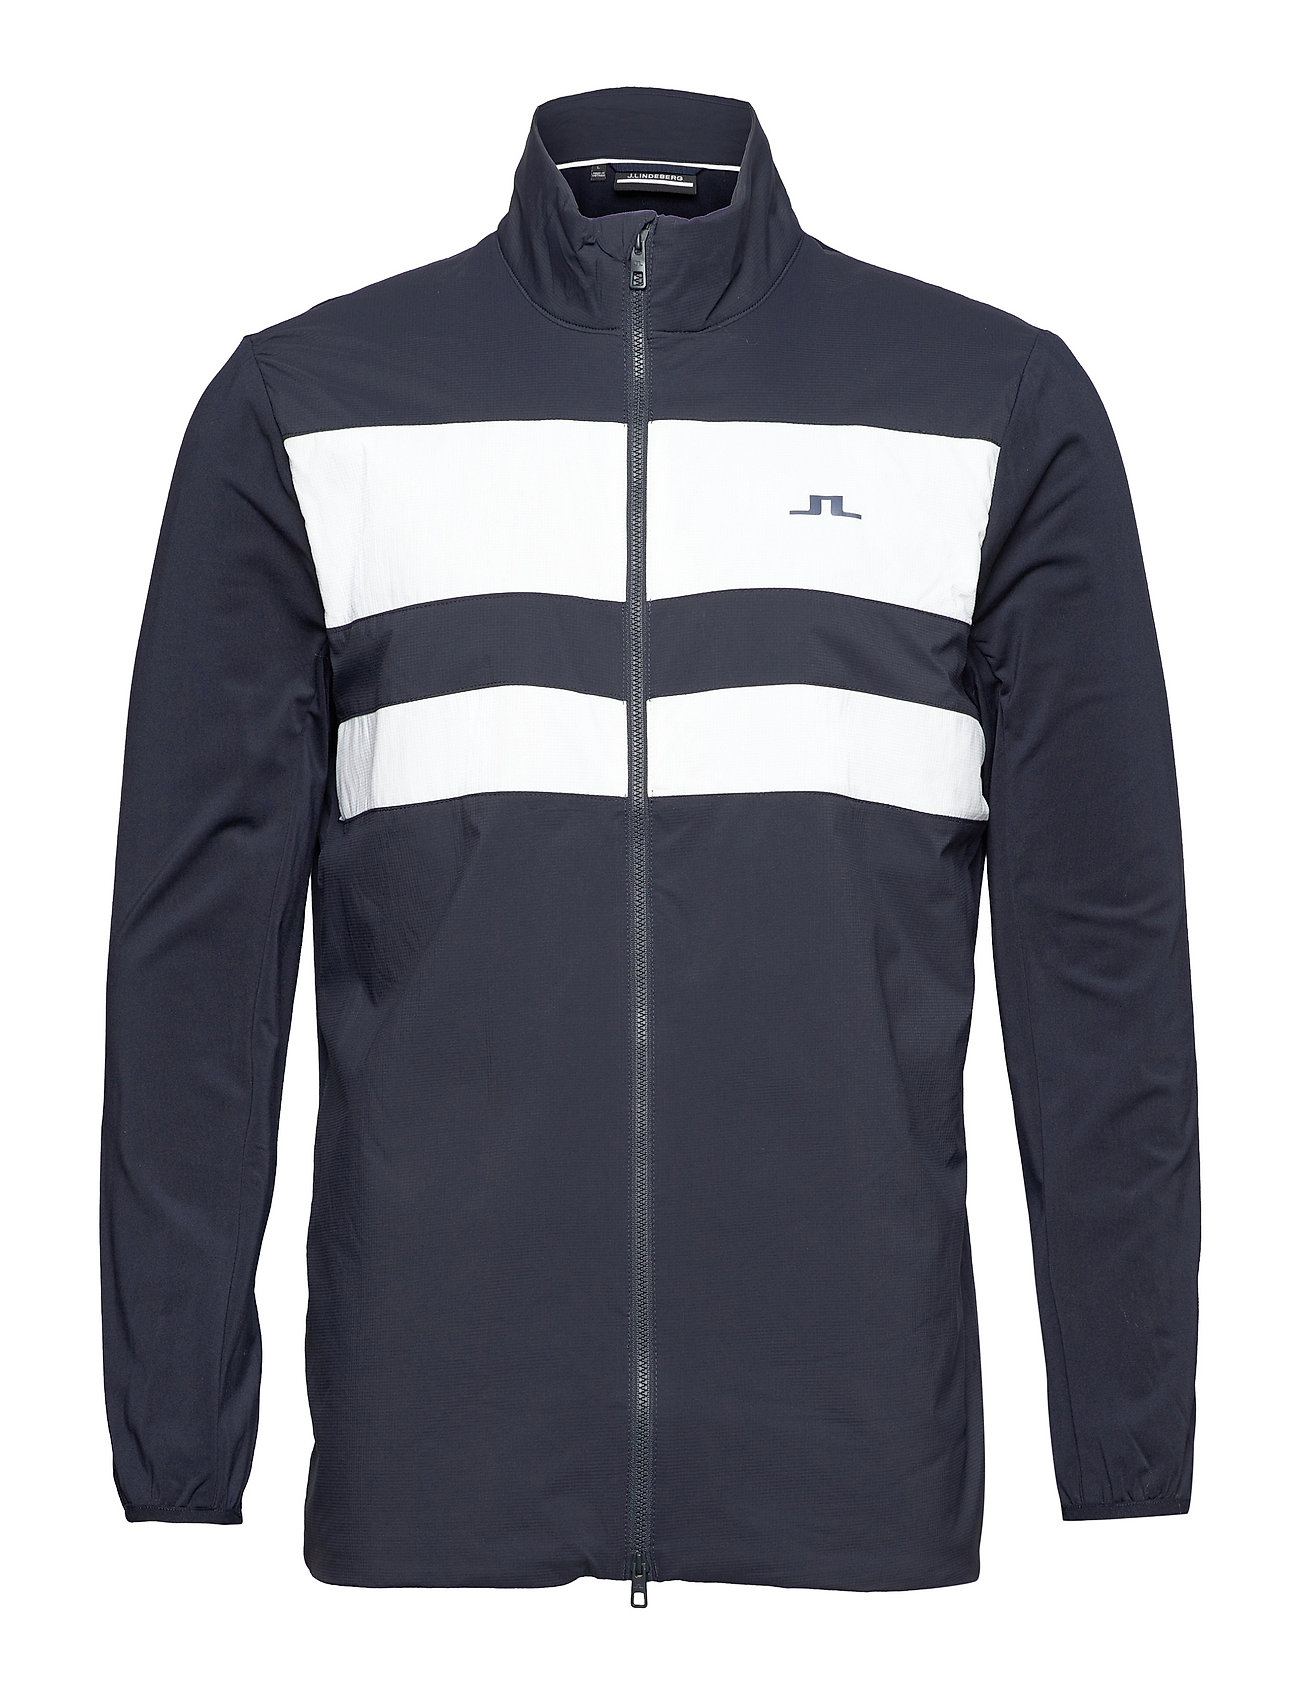 Packlight Hybrid Golf Jacket Outerwear Sport Jackets Sininen J. Lindeberg Golf